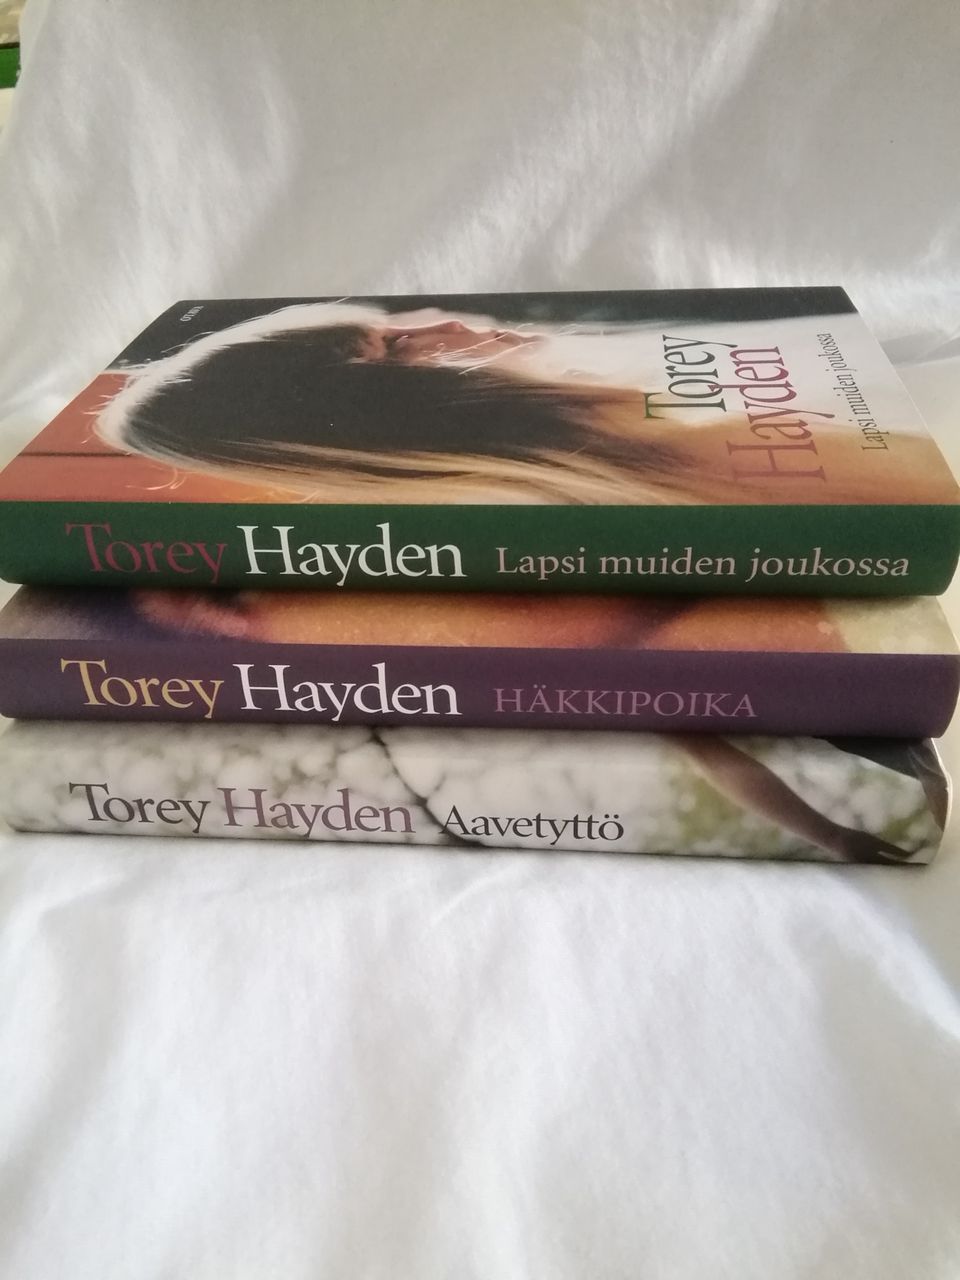 Torey Hayden - kolmen kirjan paketti